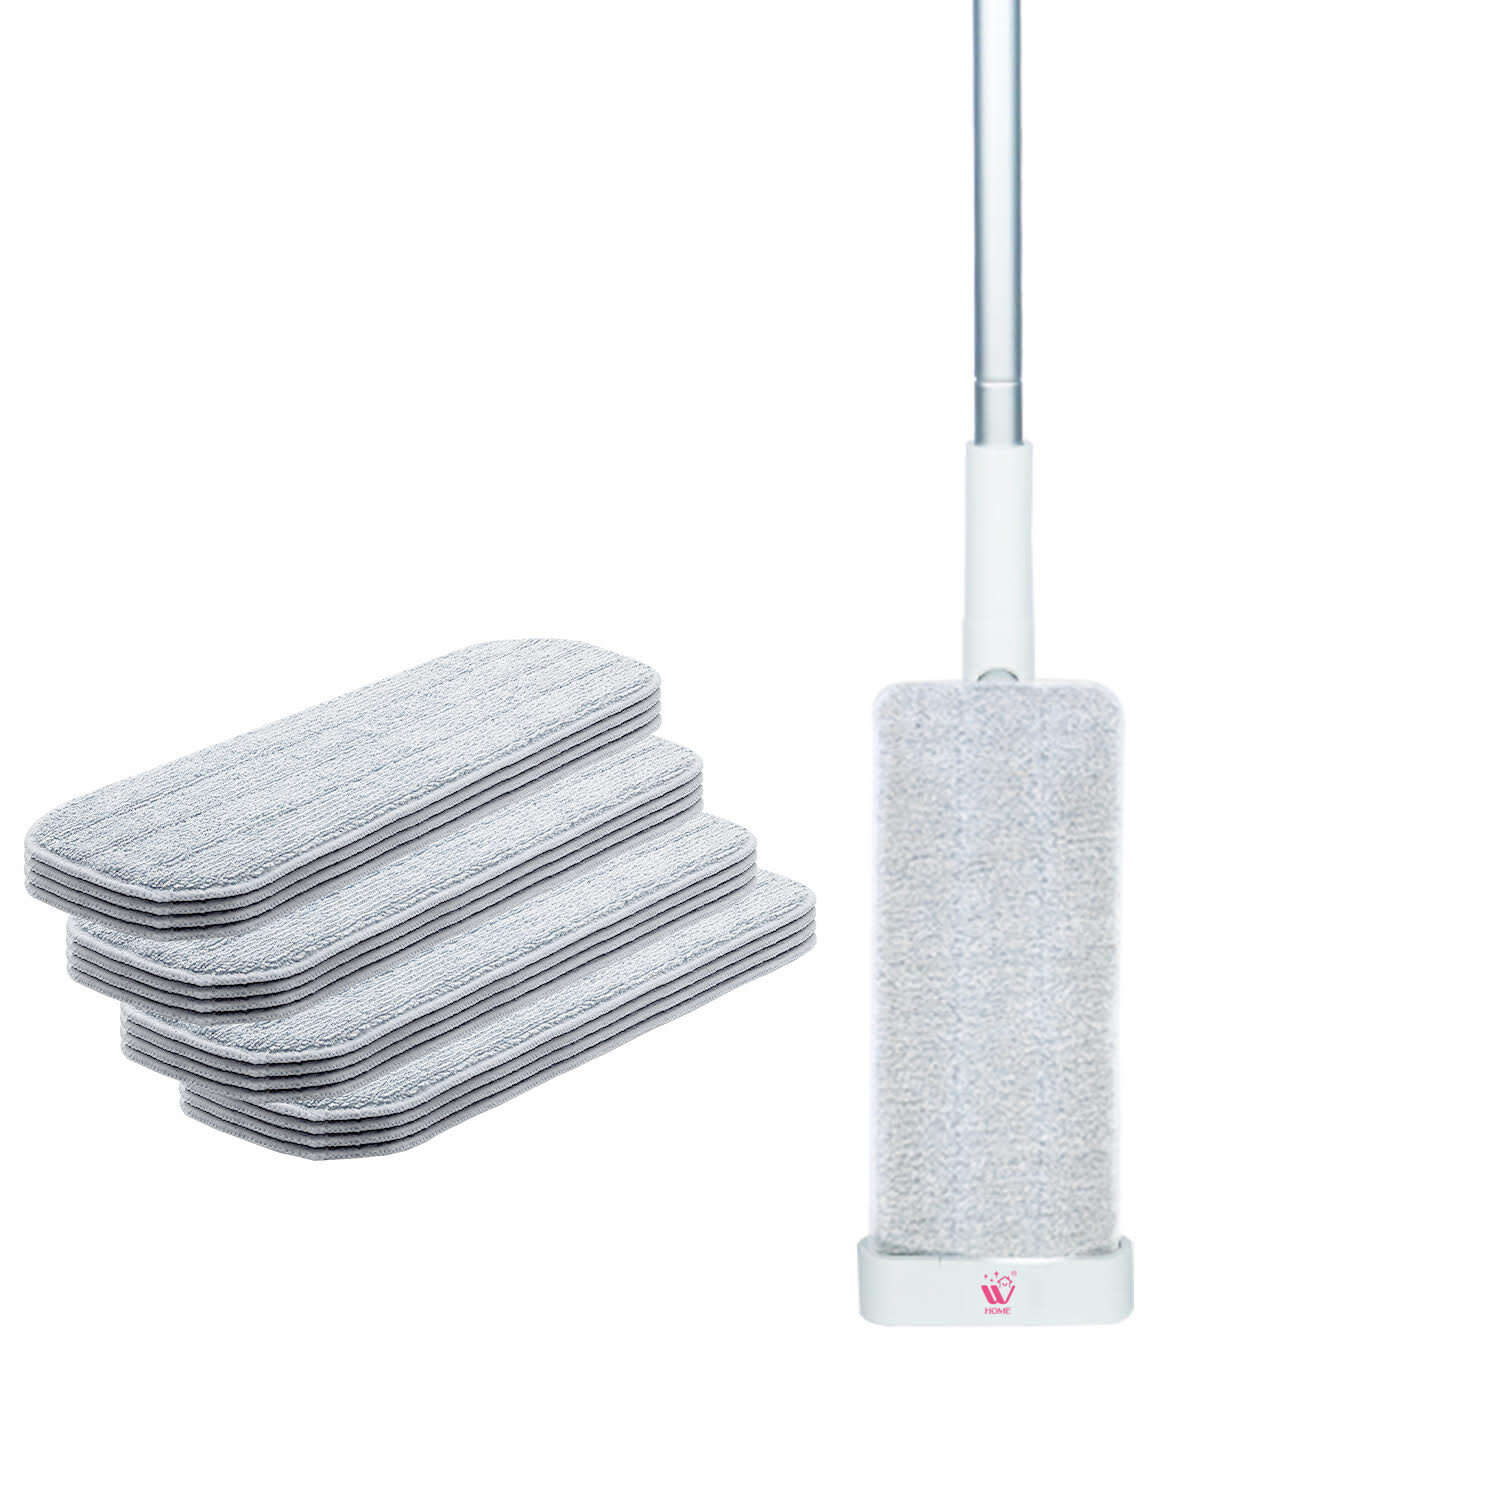 Self Squeeze Mini Mop – Zenn Clean